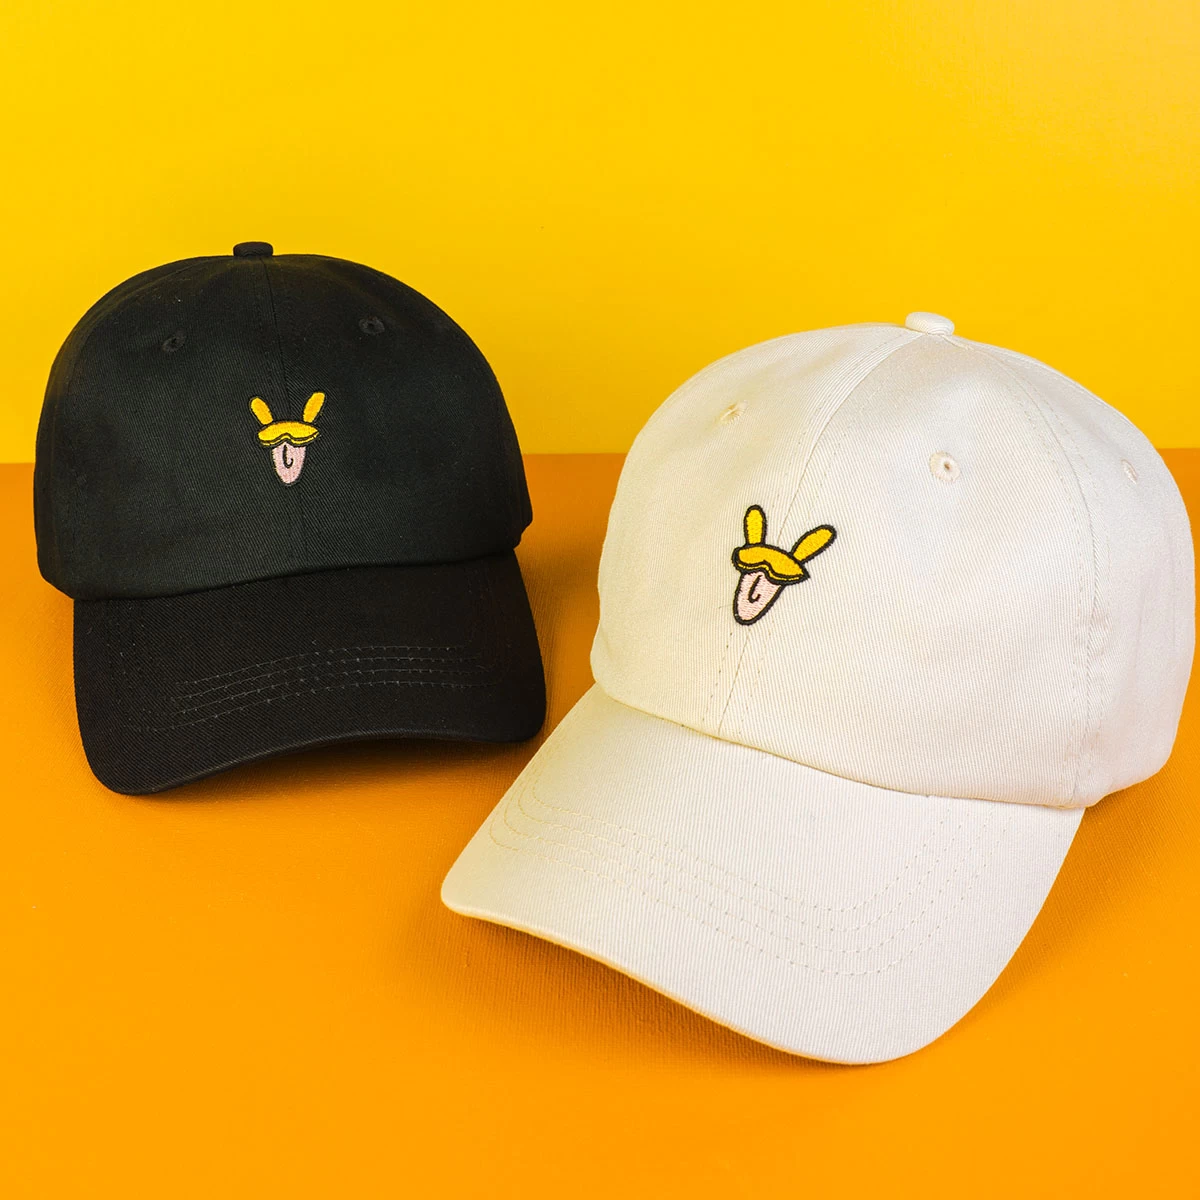 embroidery vfa logo sports baseball hats custom hats